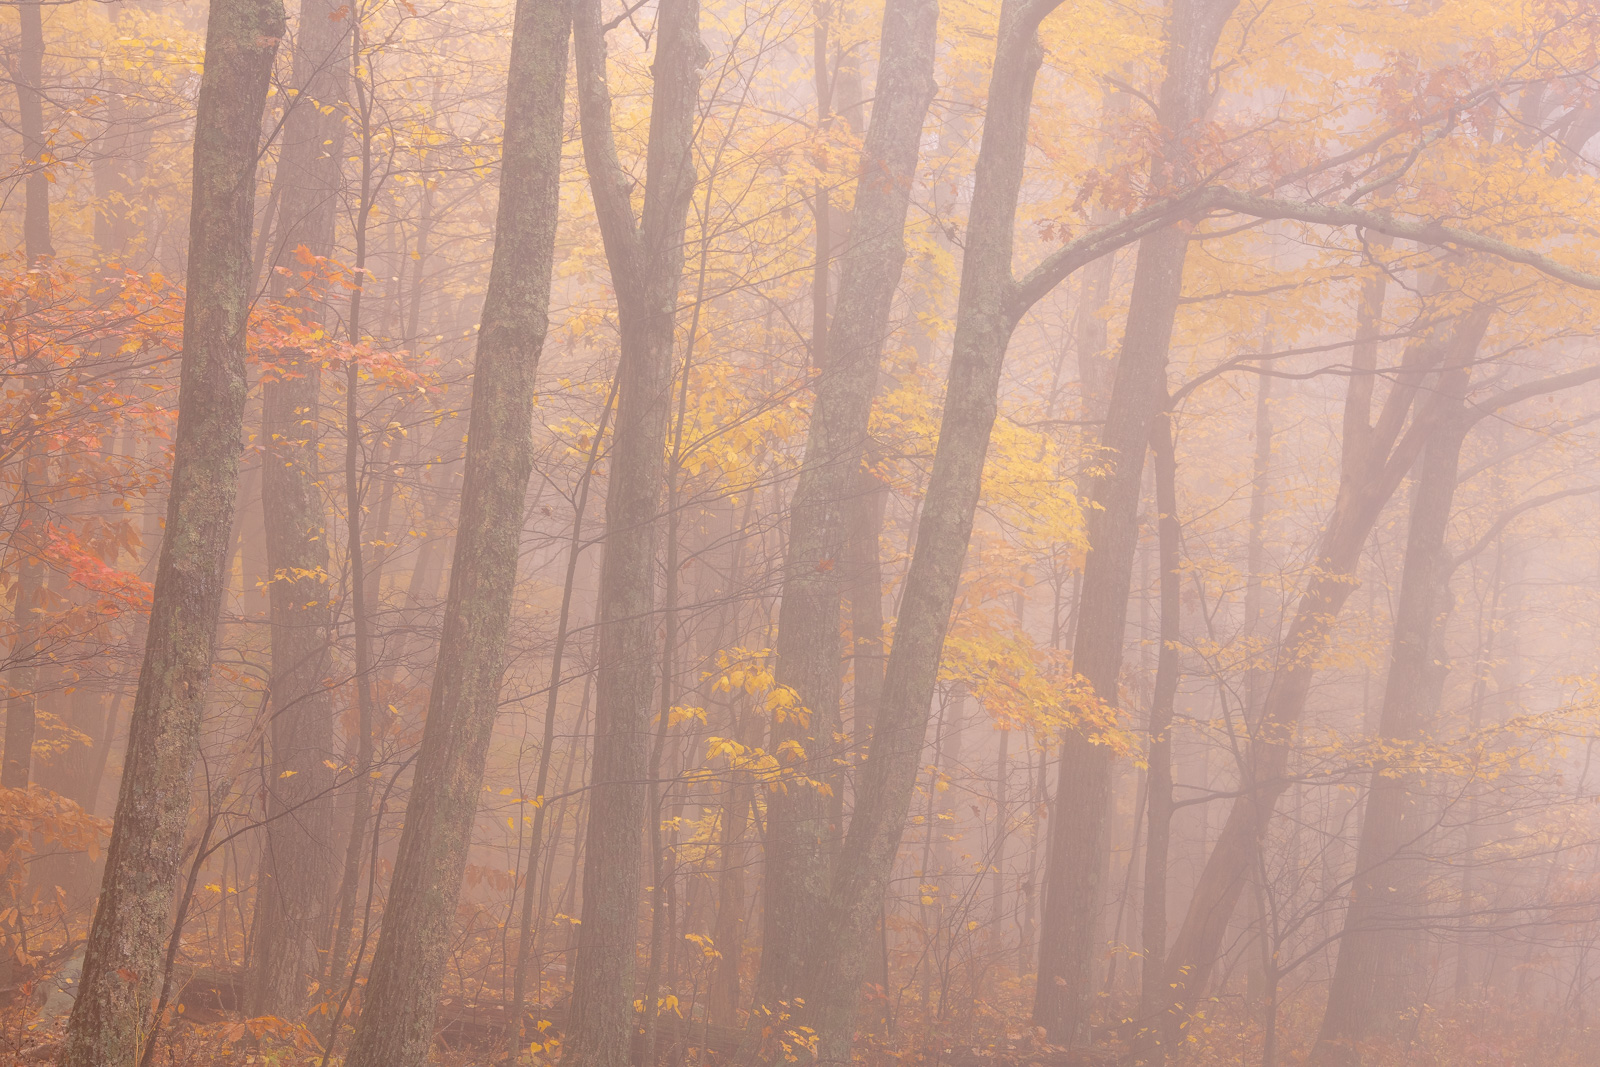 Autumn forest with dense fog, Shenadoah National Park.